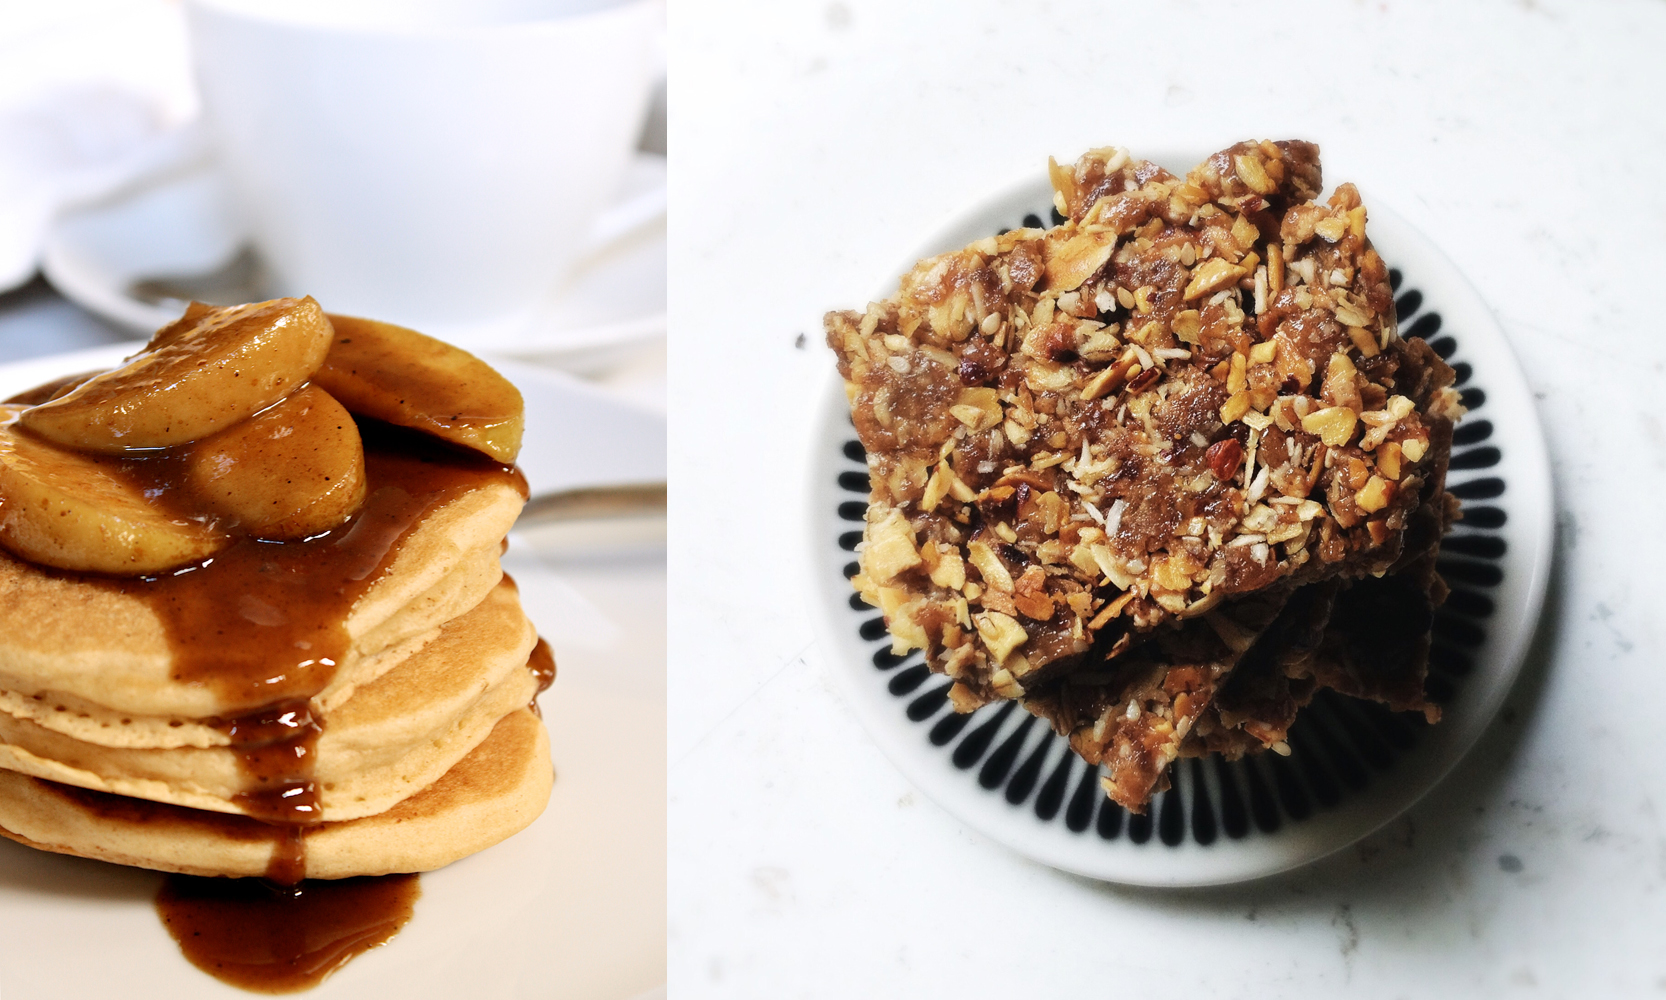 pancakes and granola bar diptych.jpg